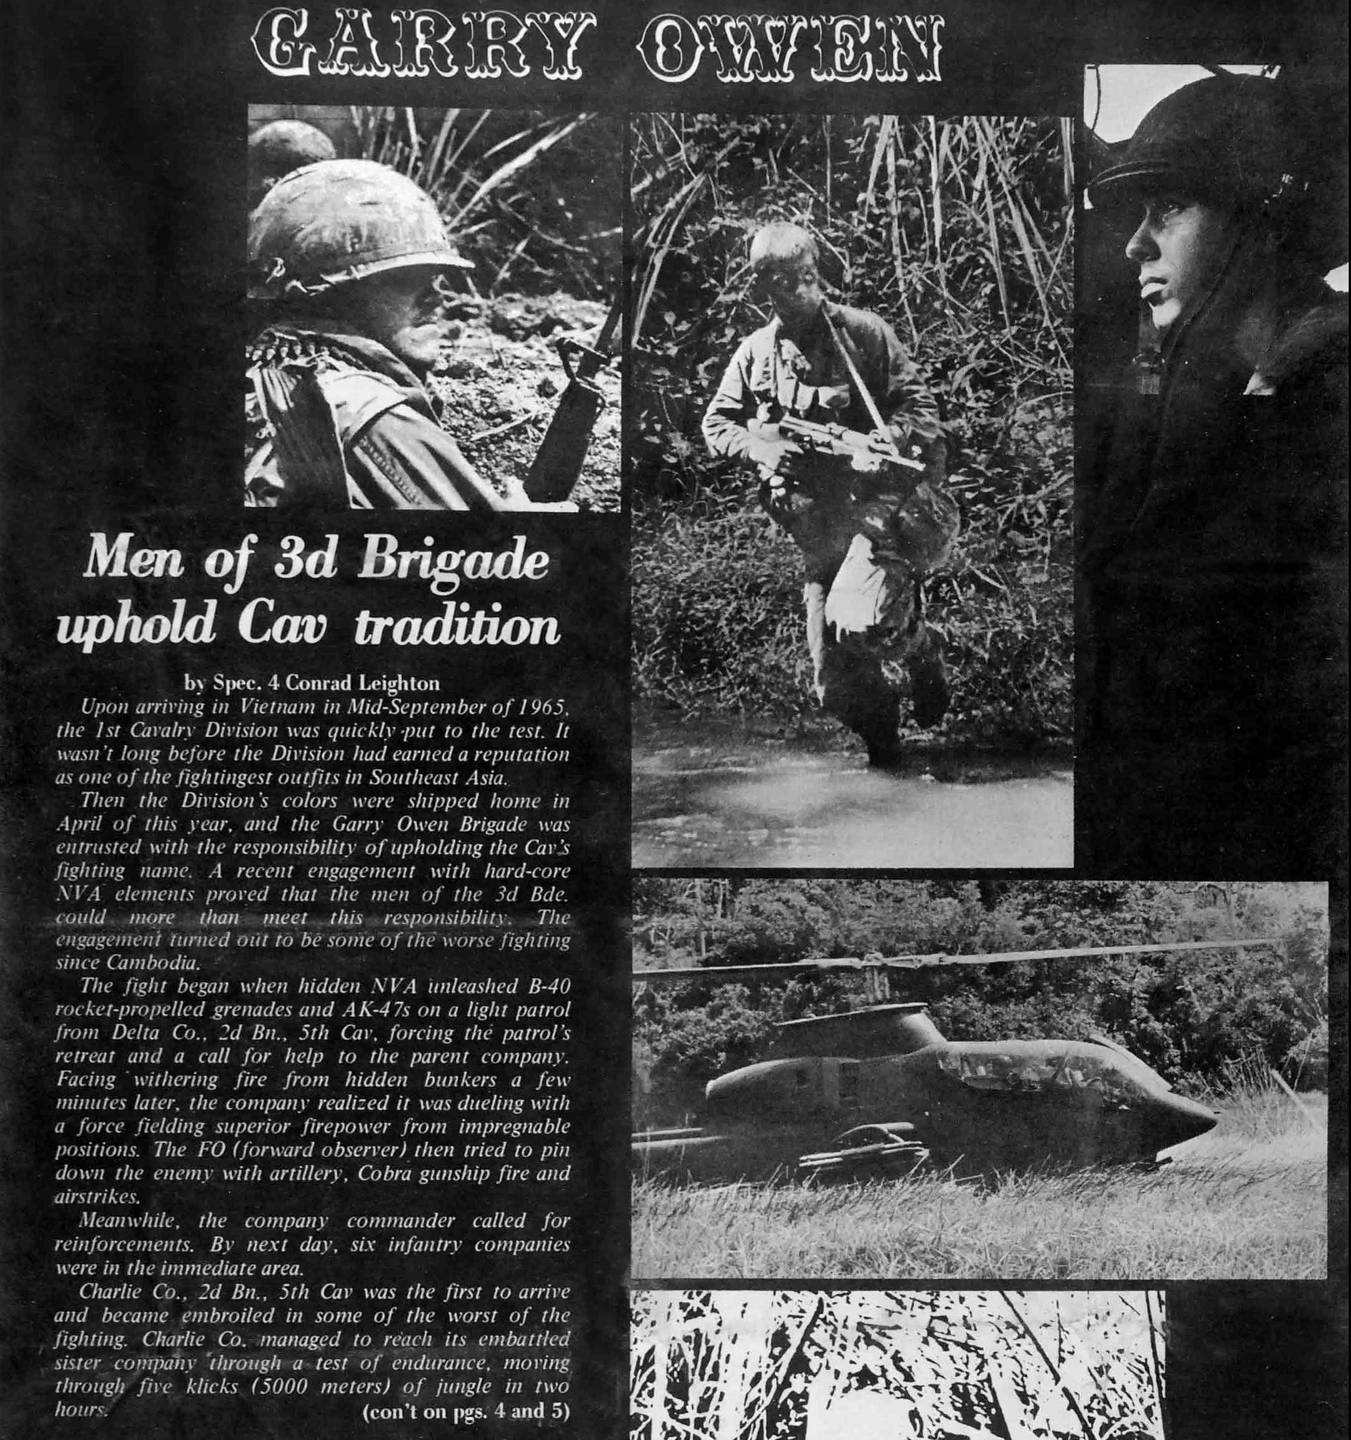 A newspaper article featuring Vietnam War coverage.